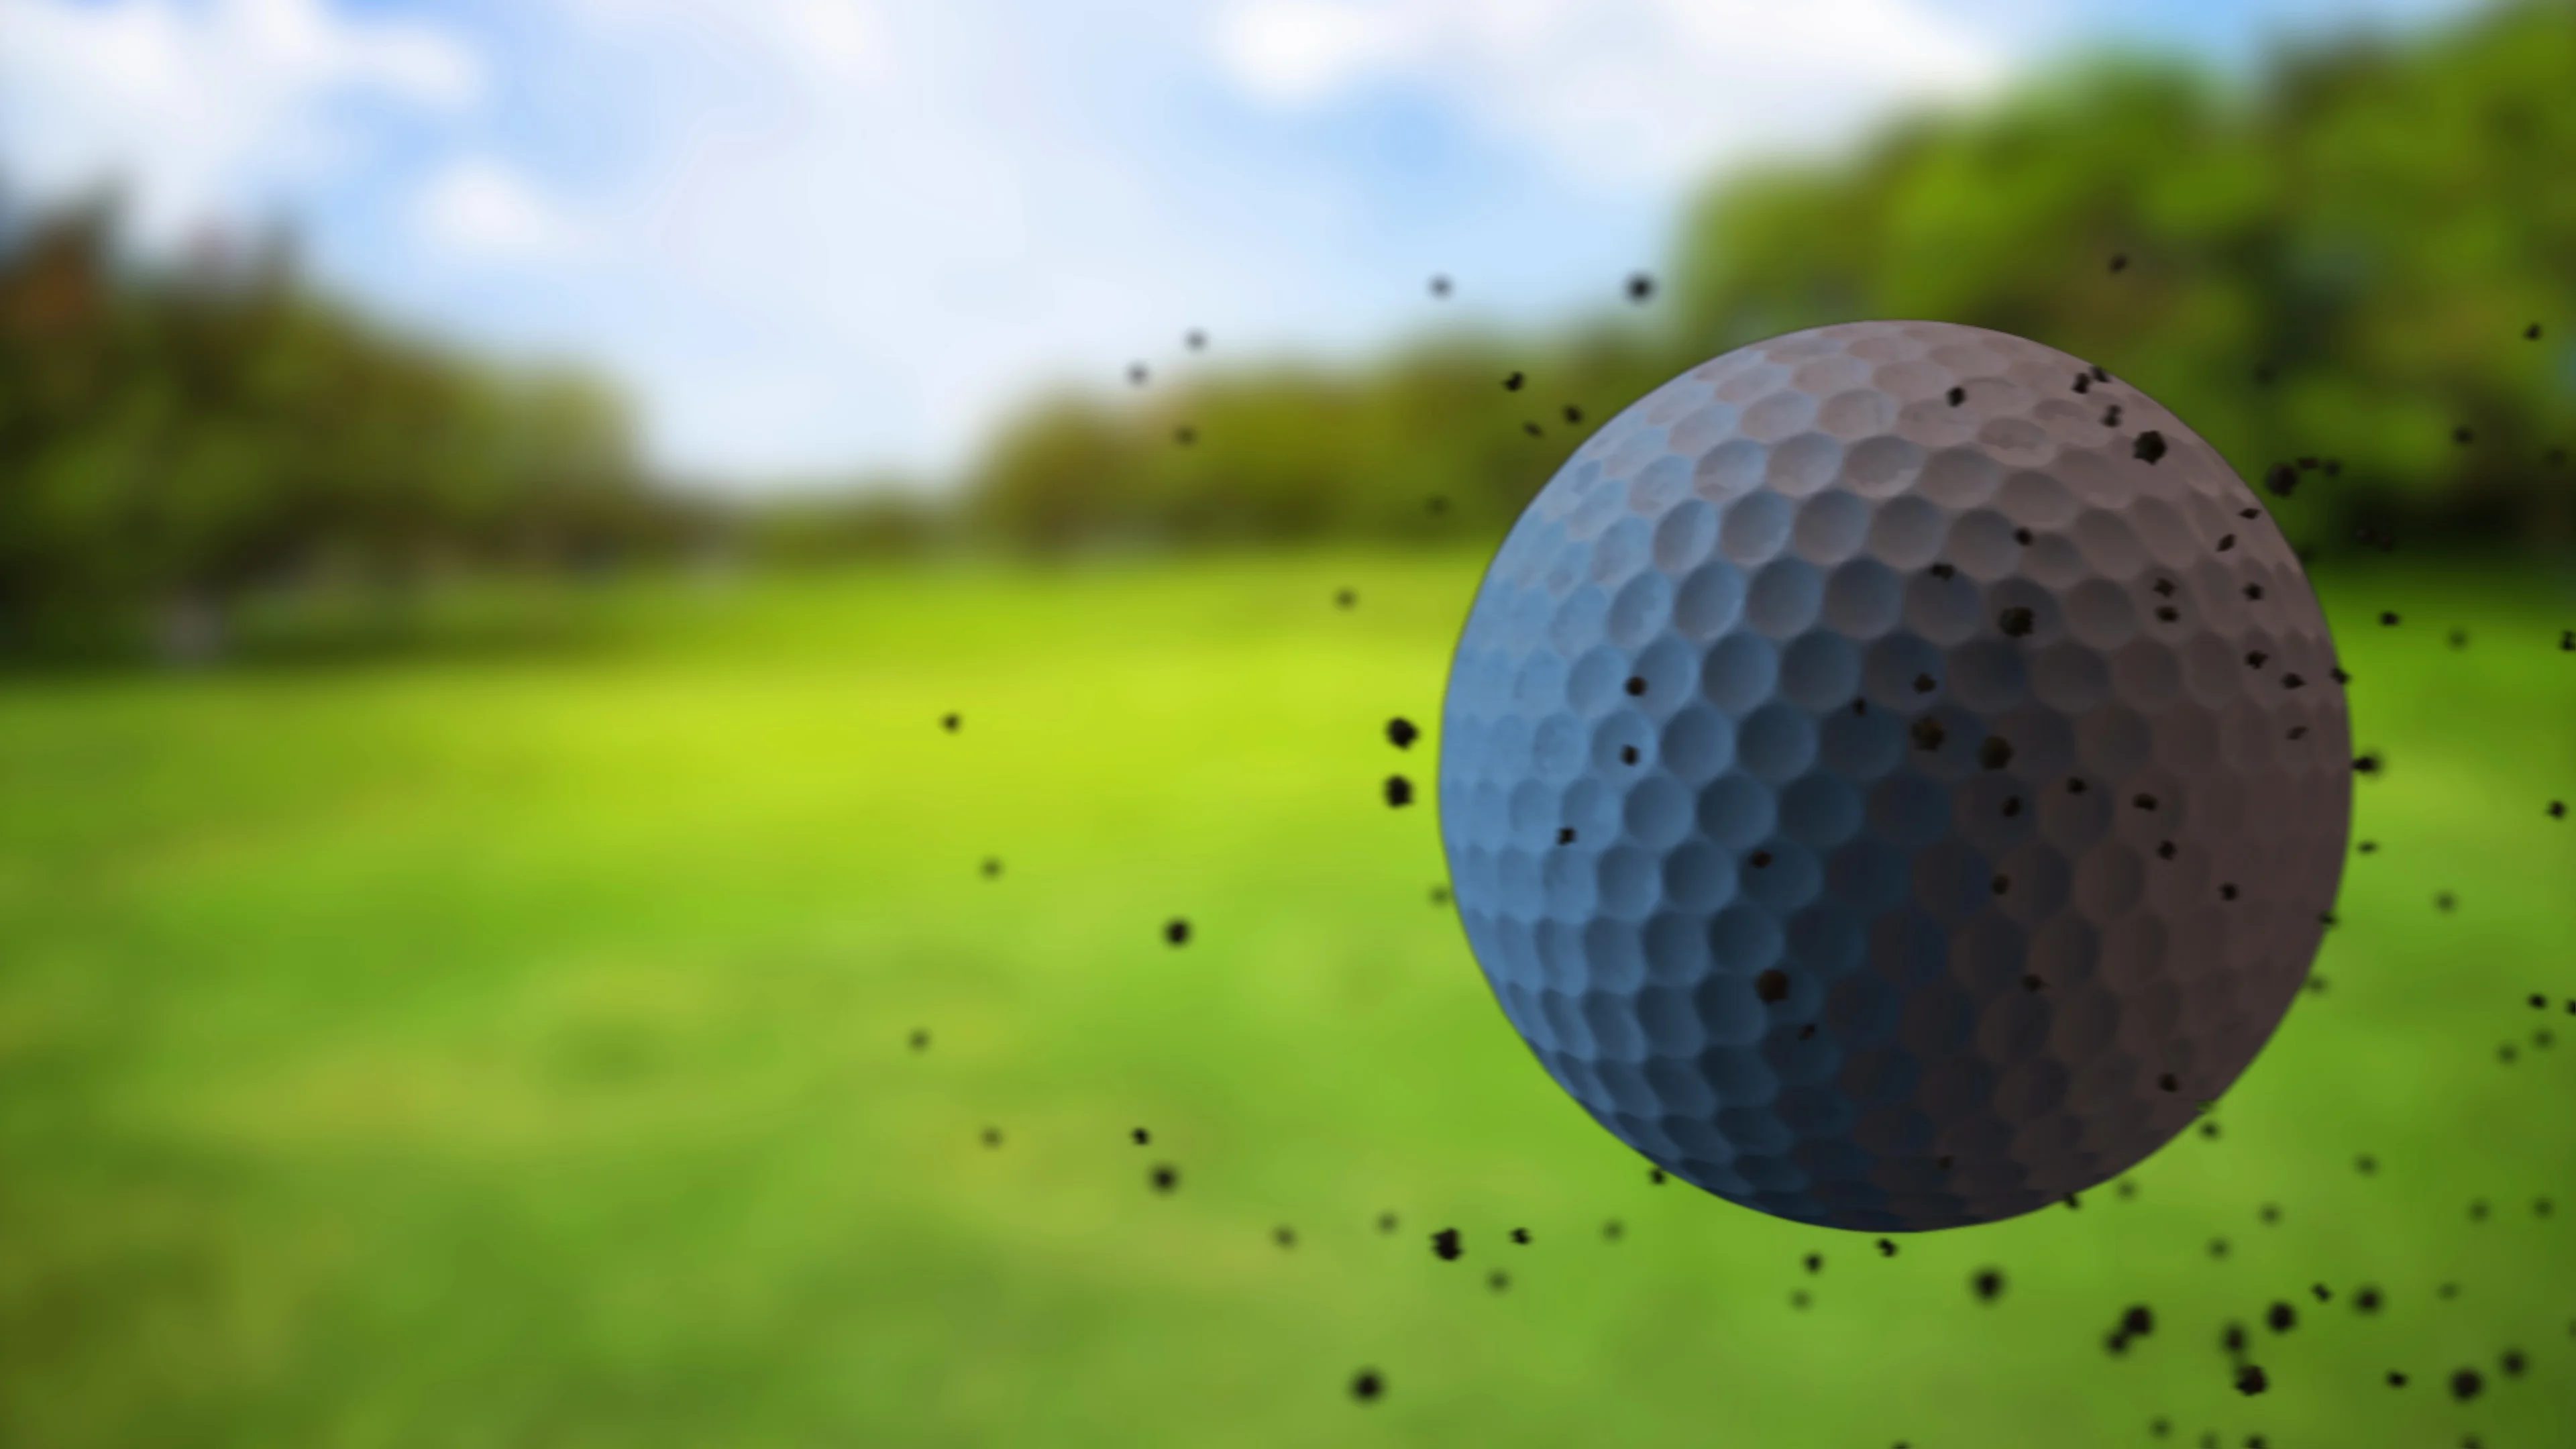 https://images.pond5.com/golf-ball-air-slow-motion-089800118_prevstill.jpeg